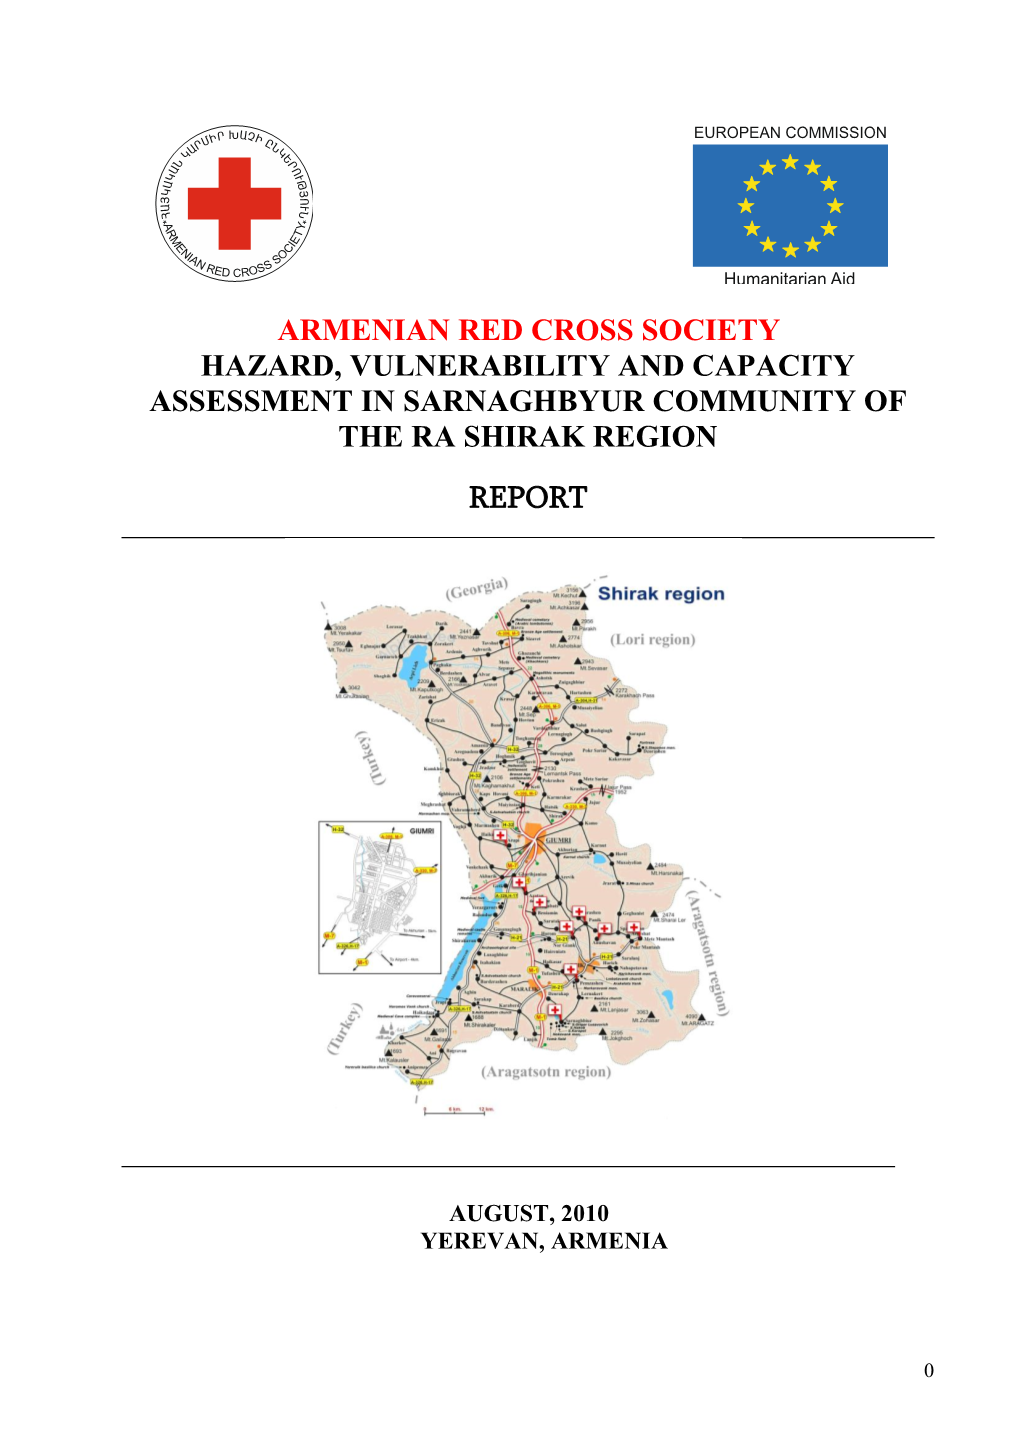 Armenian Red Cross Society Hazard, Vulnerability and Capacity Assessment in Sarnaghbyur Community of the Ra Shirak Region